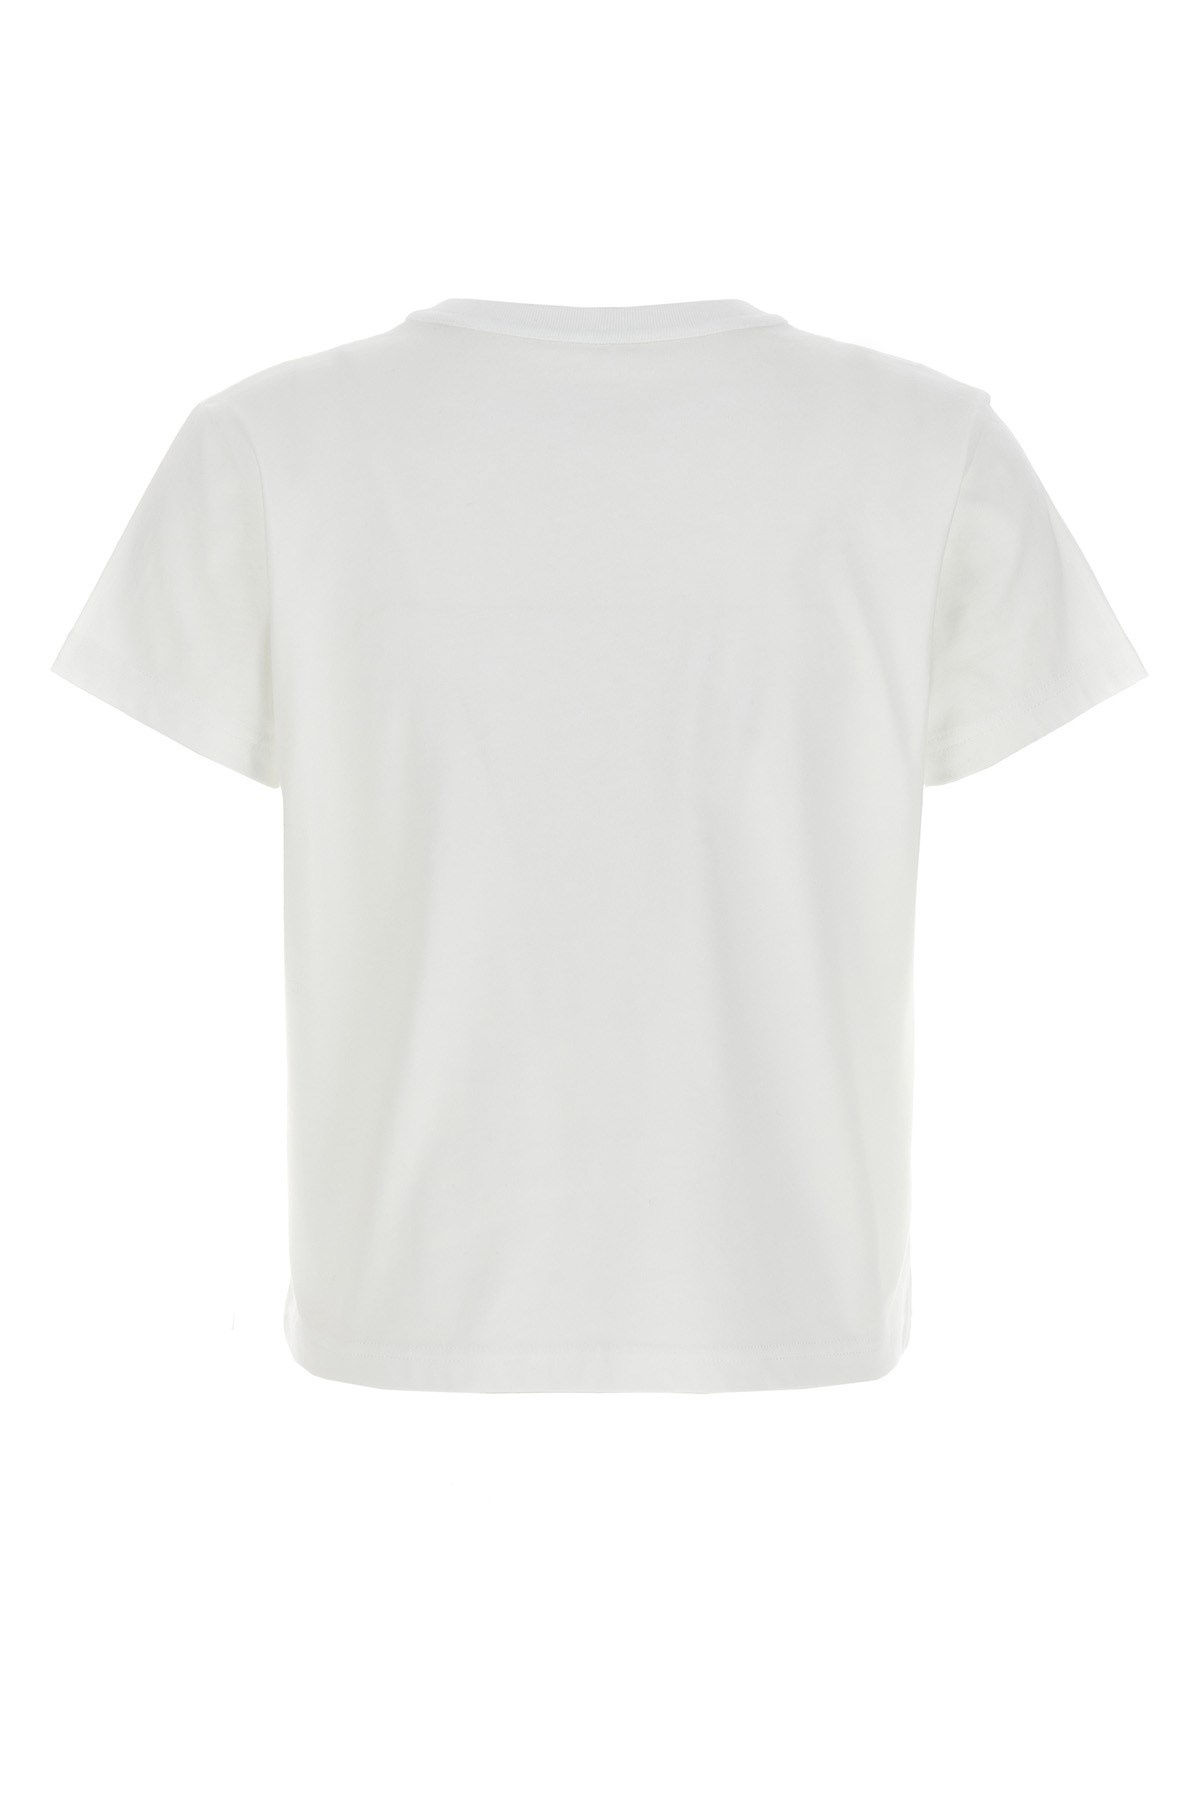 'Essential JSY Shrunk' T-shirt - 3